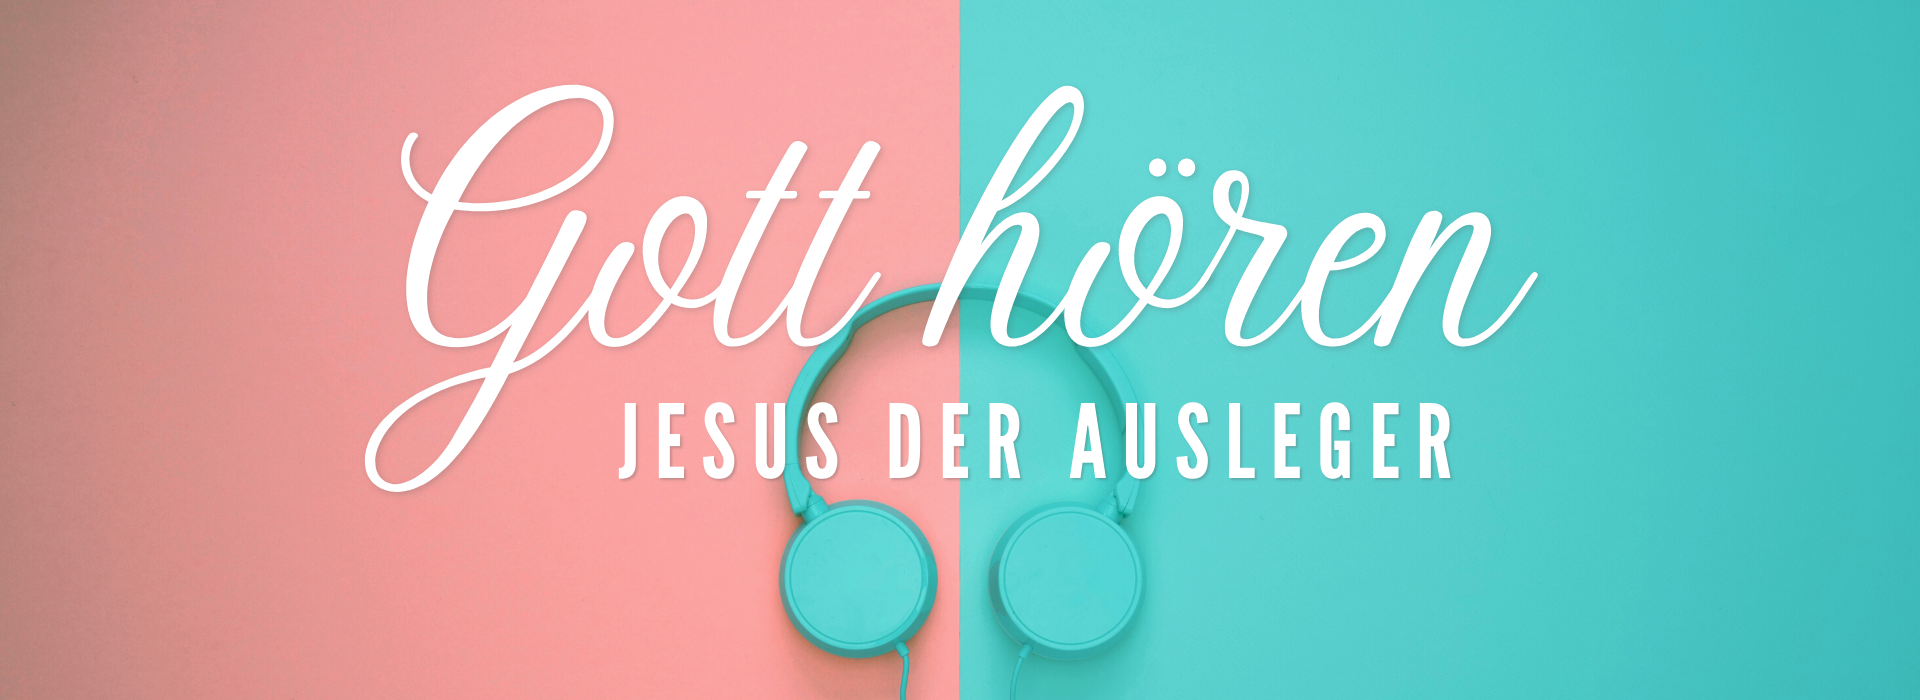 Gott hören #3 – Jesus der Ausleger